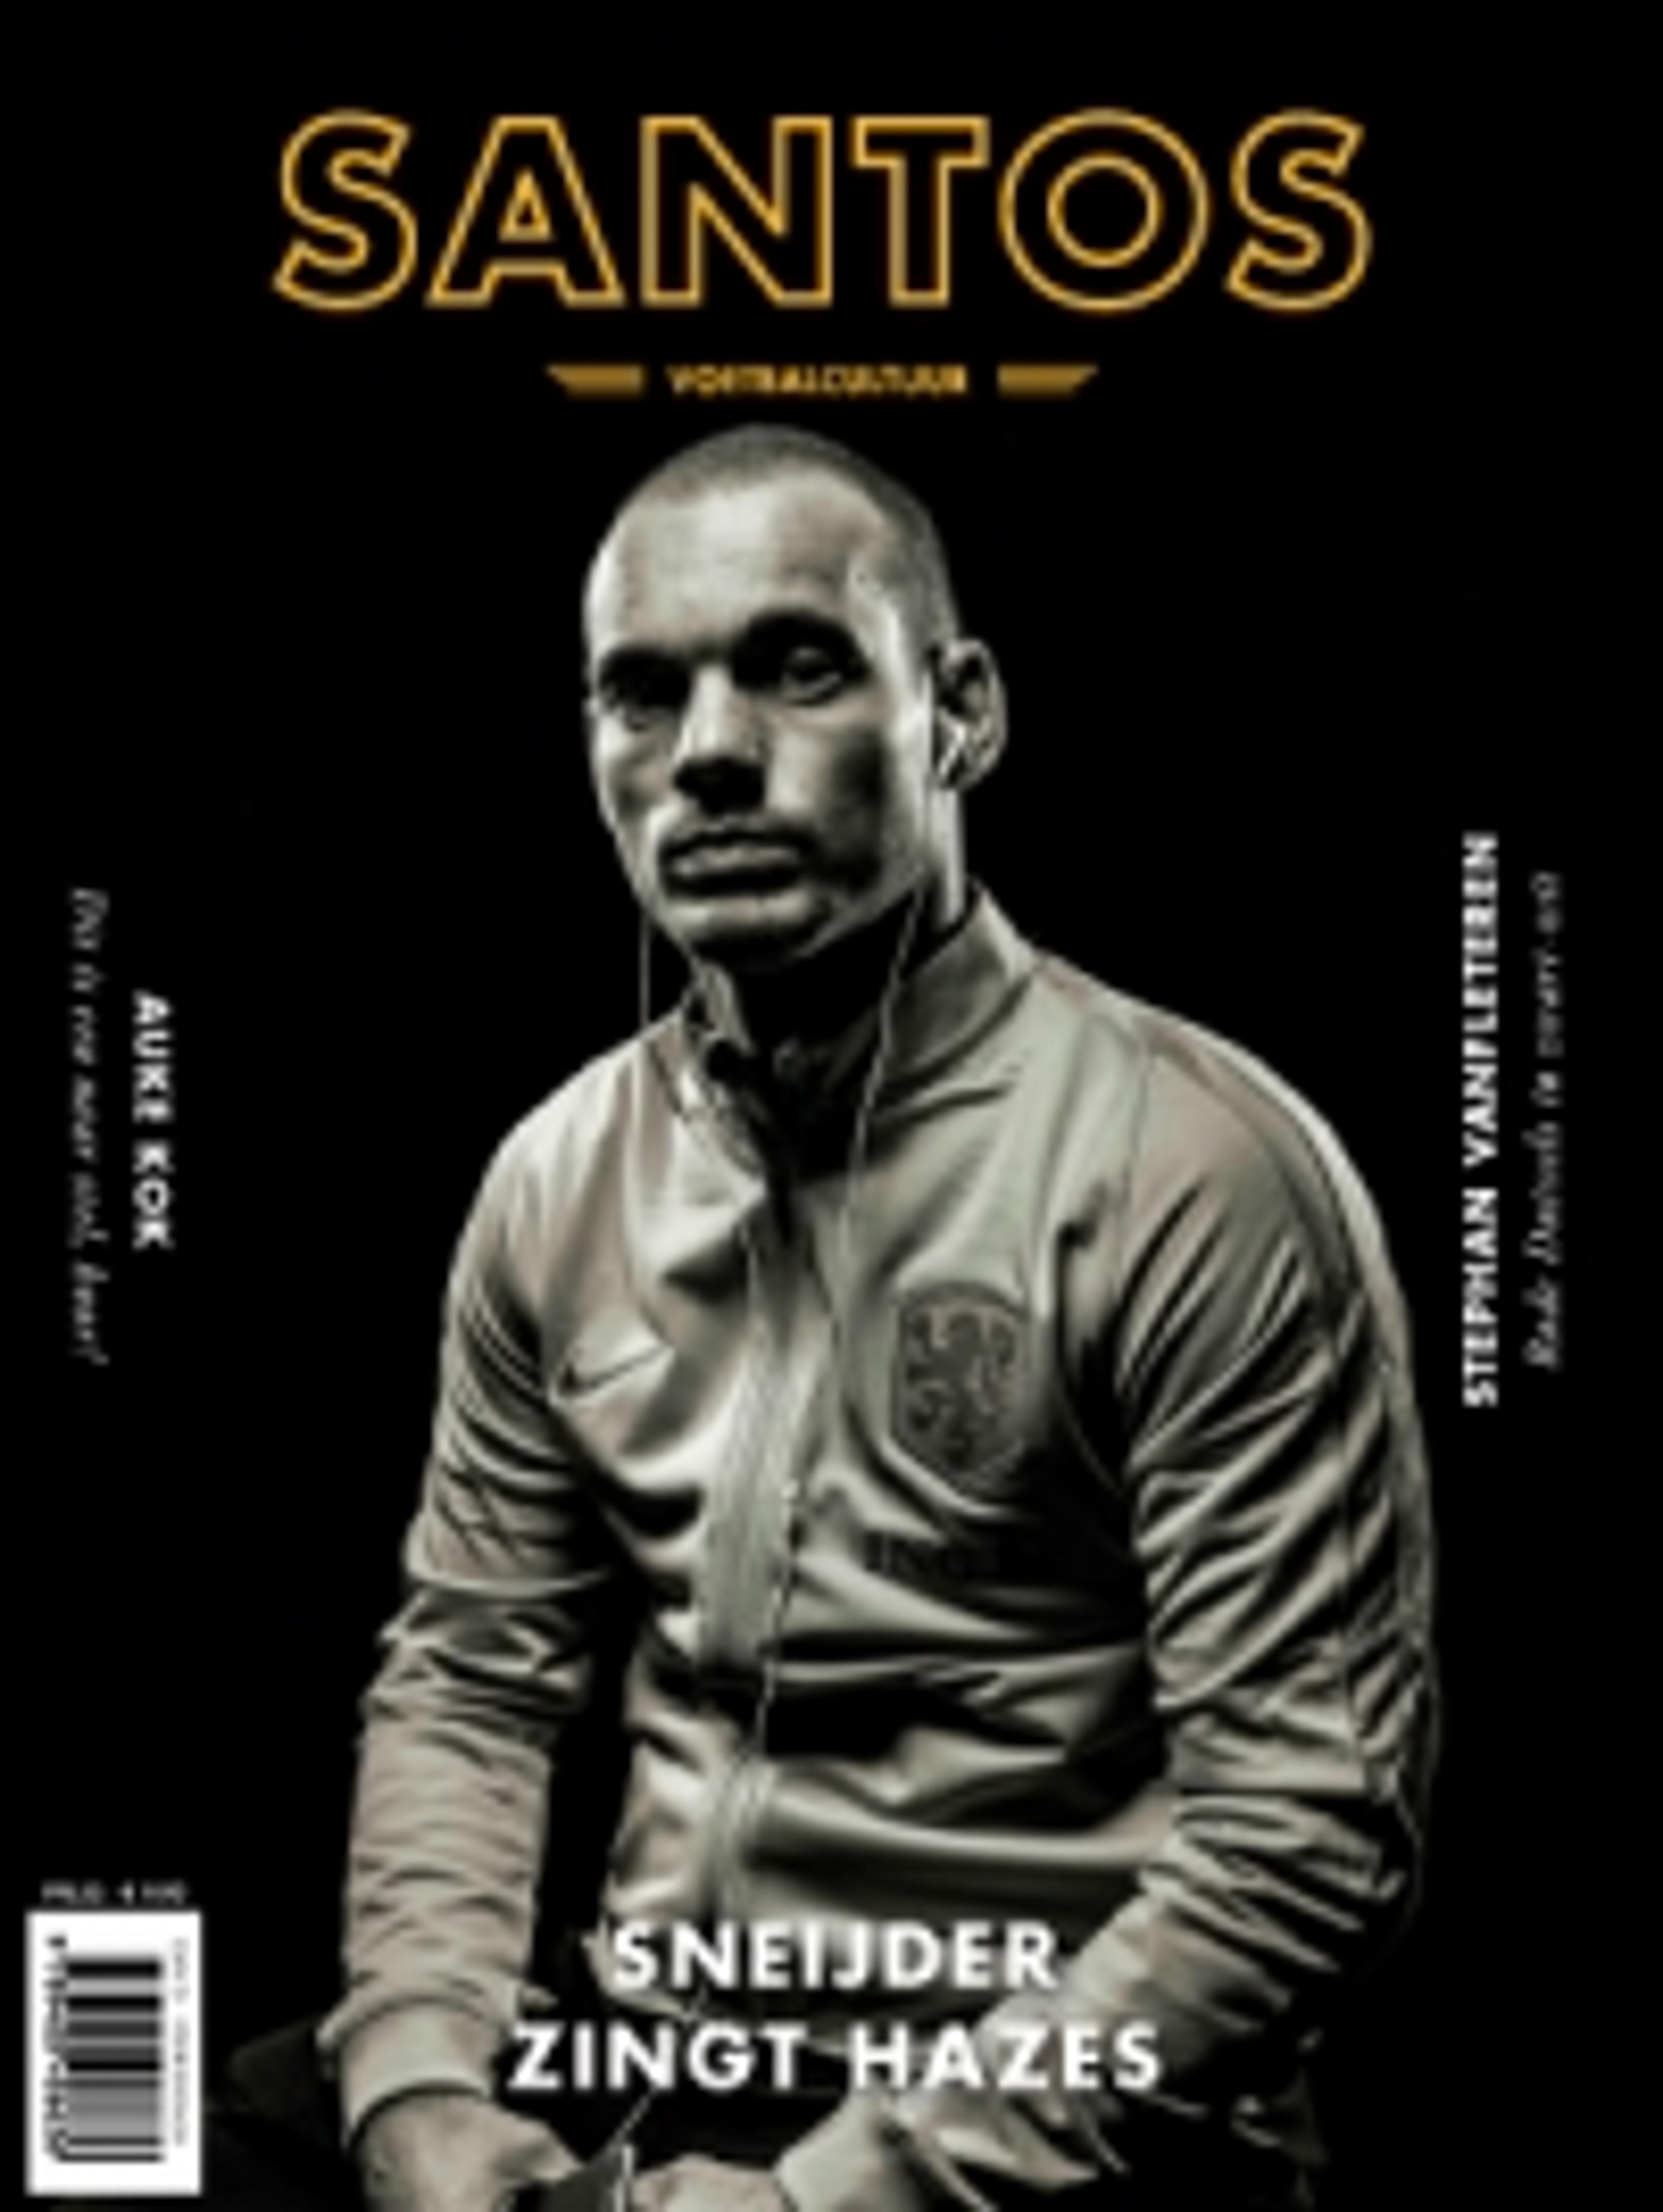 Bröcker Media BV ondersteunt sales voetbalmagazine Santos